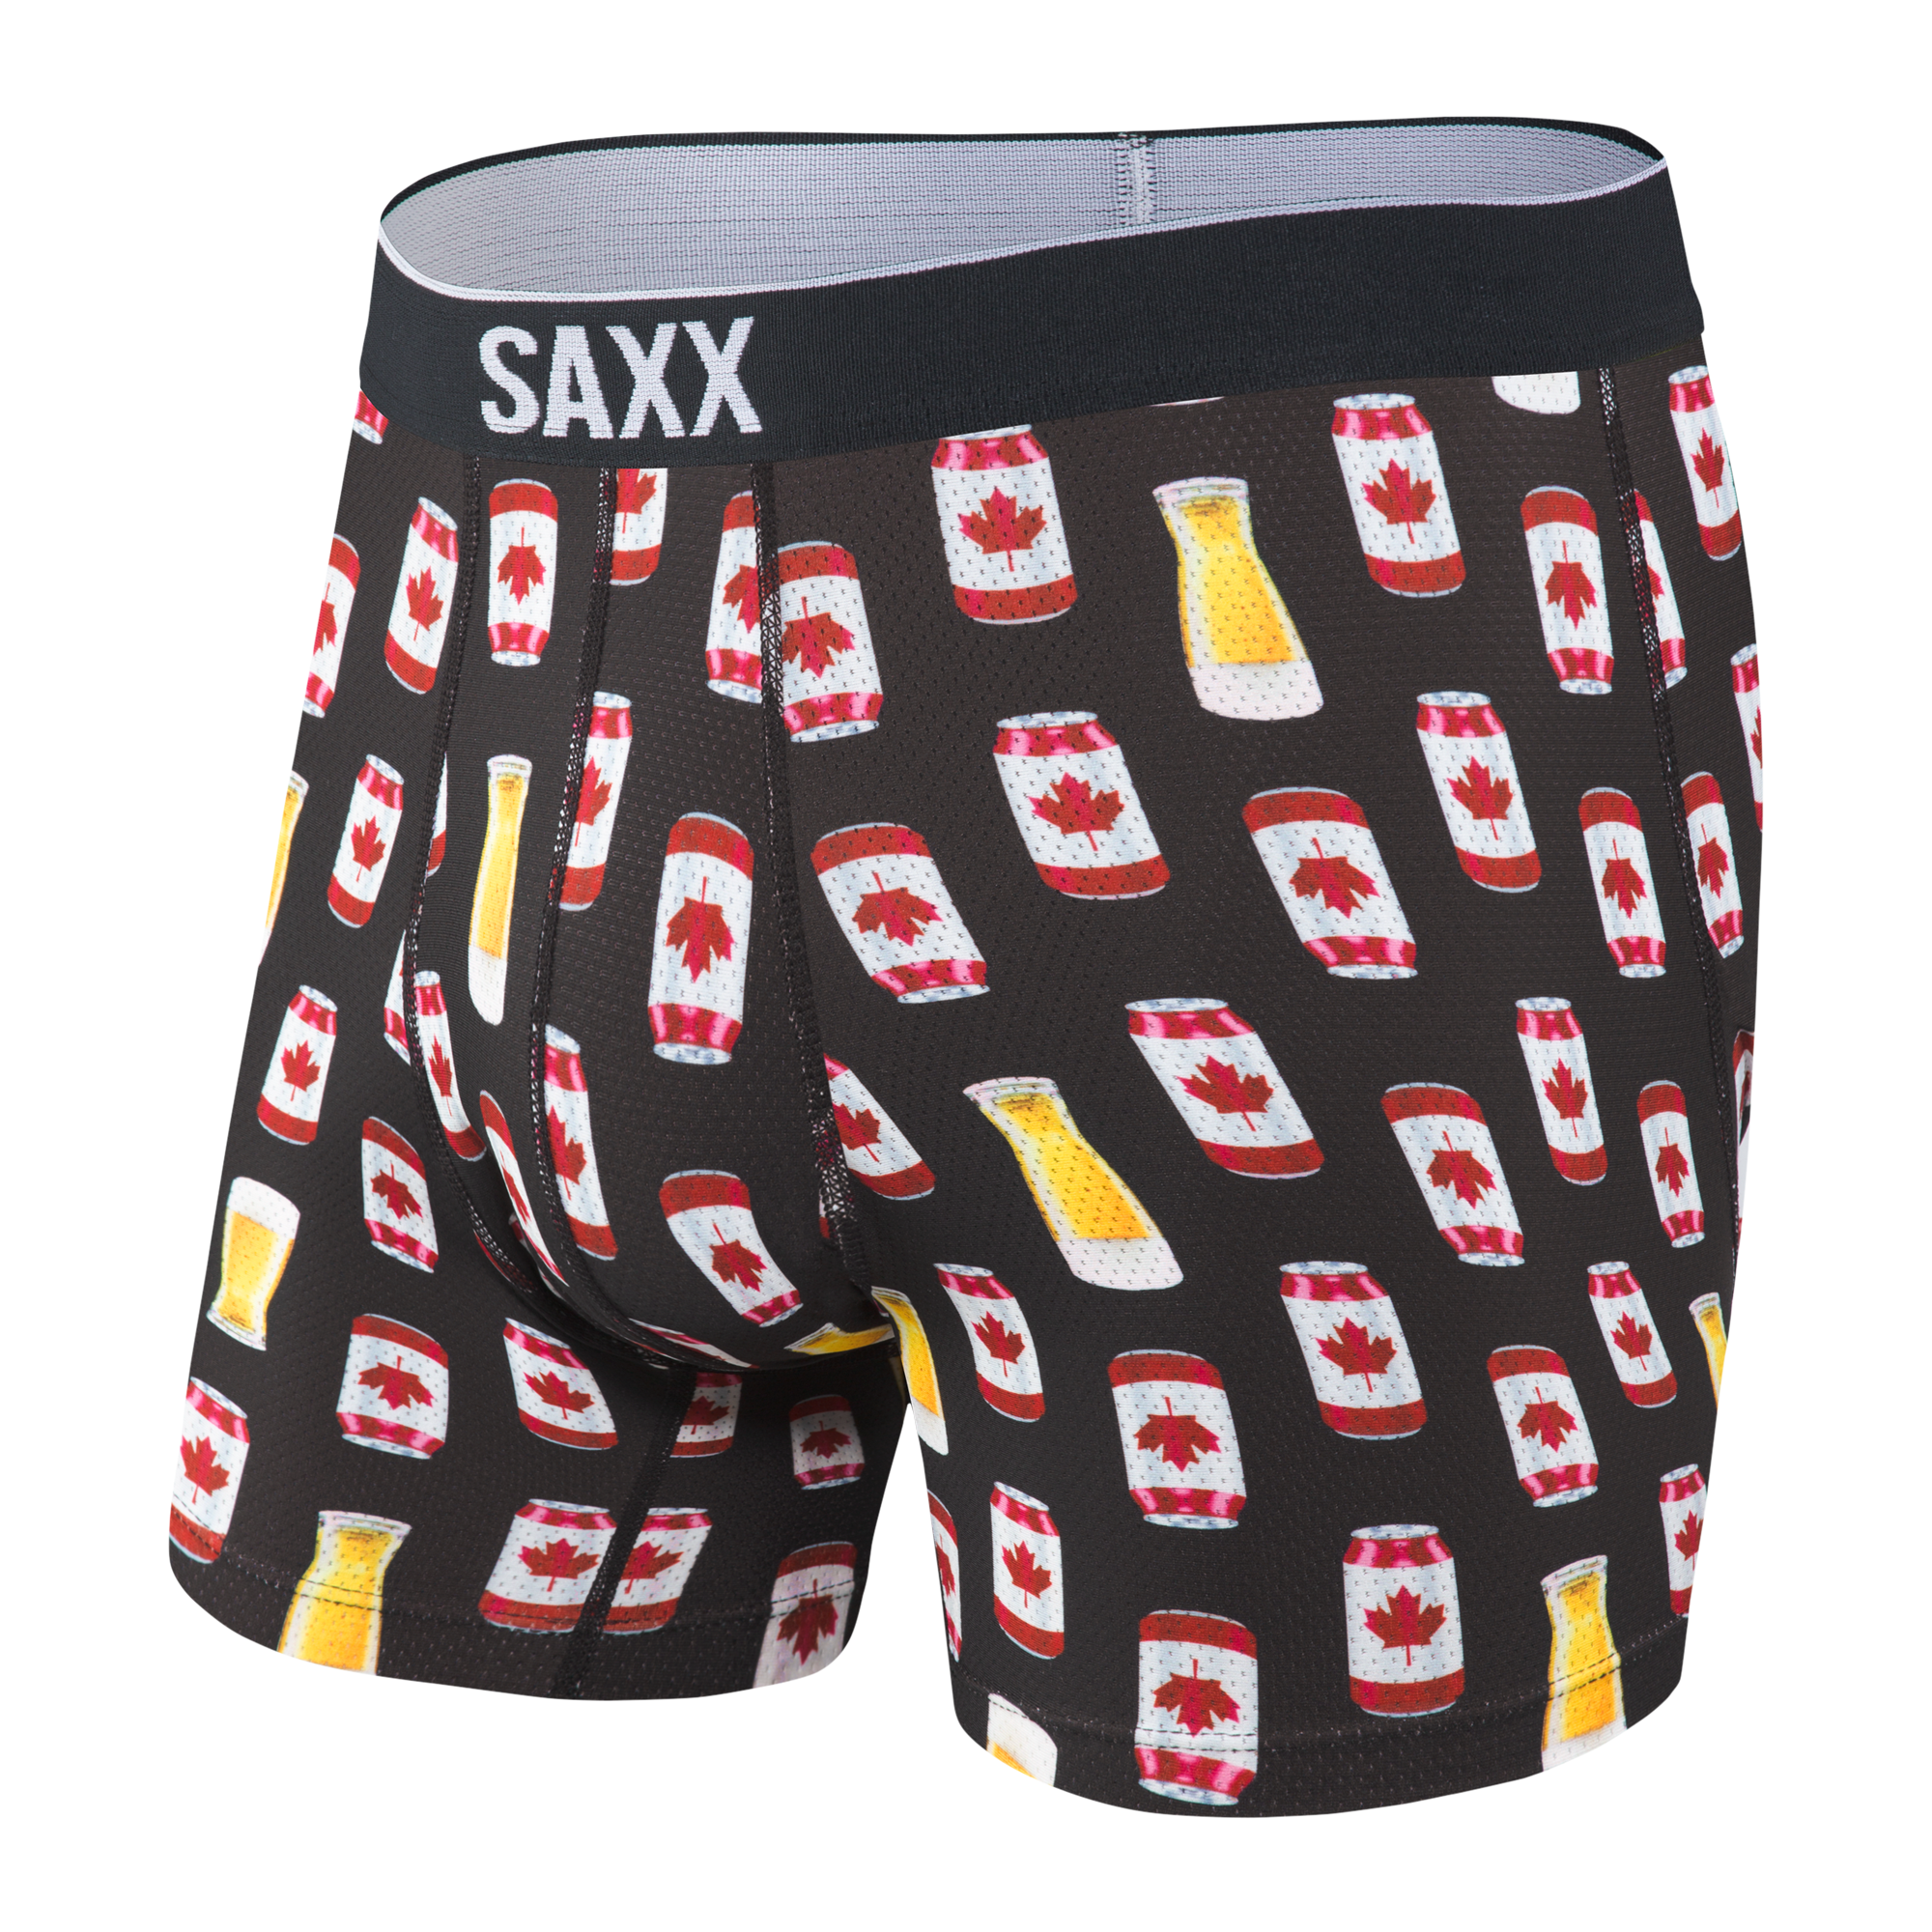 SAXX Boxer Volt